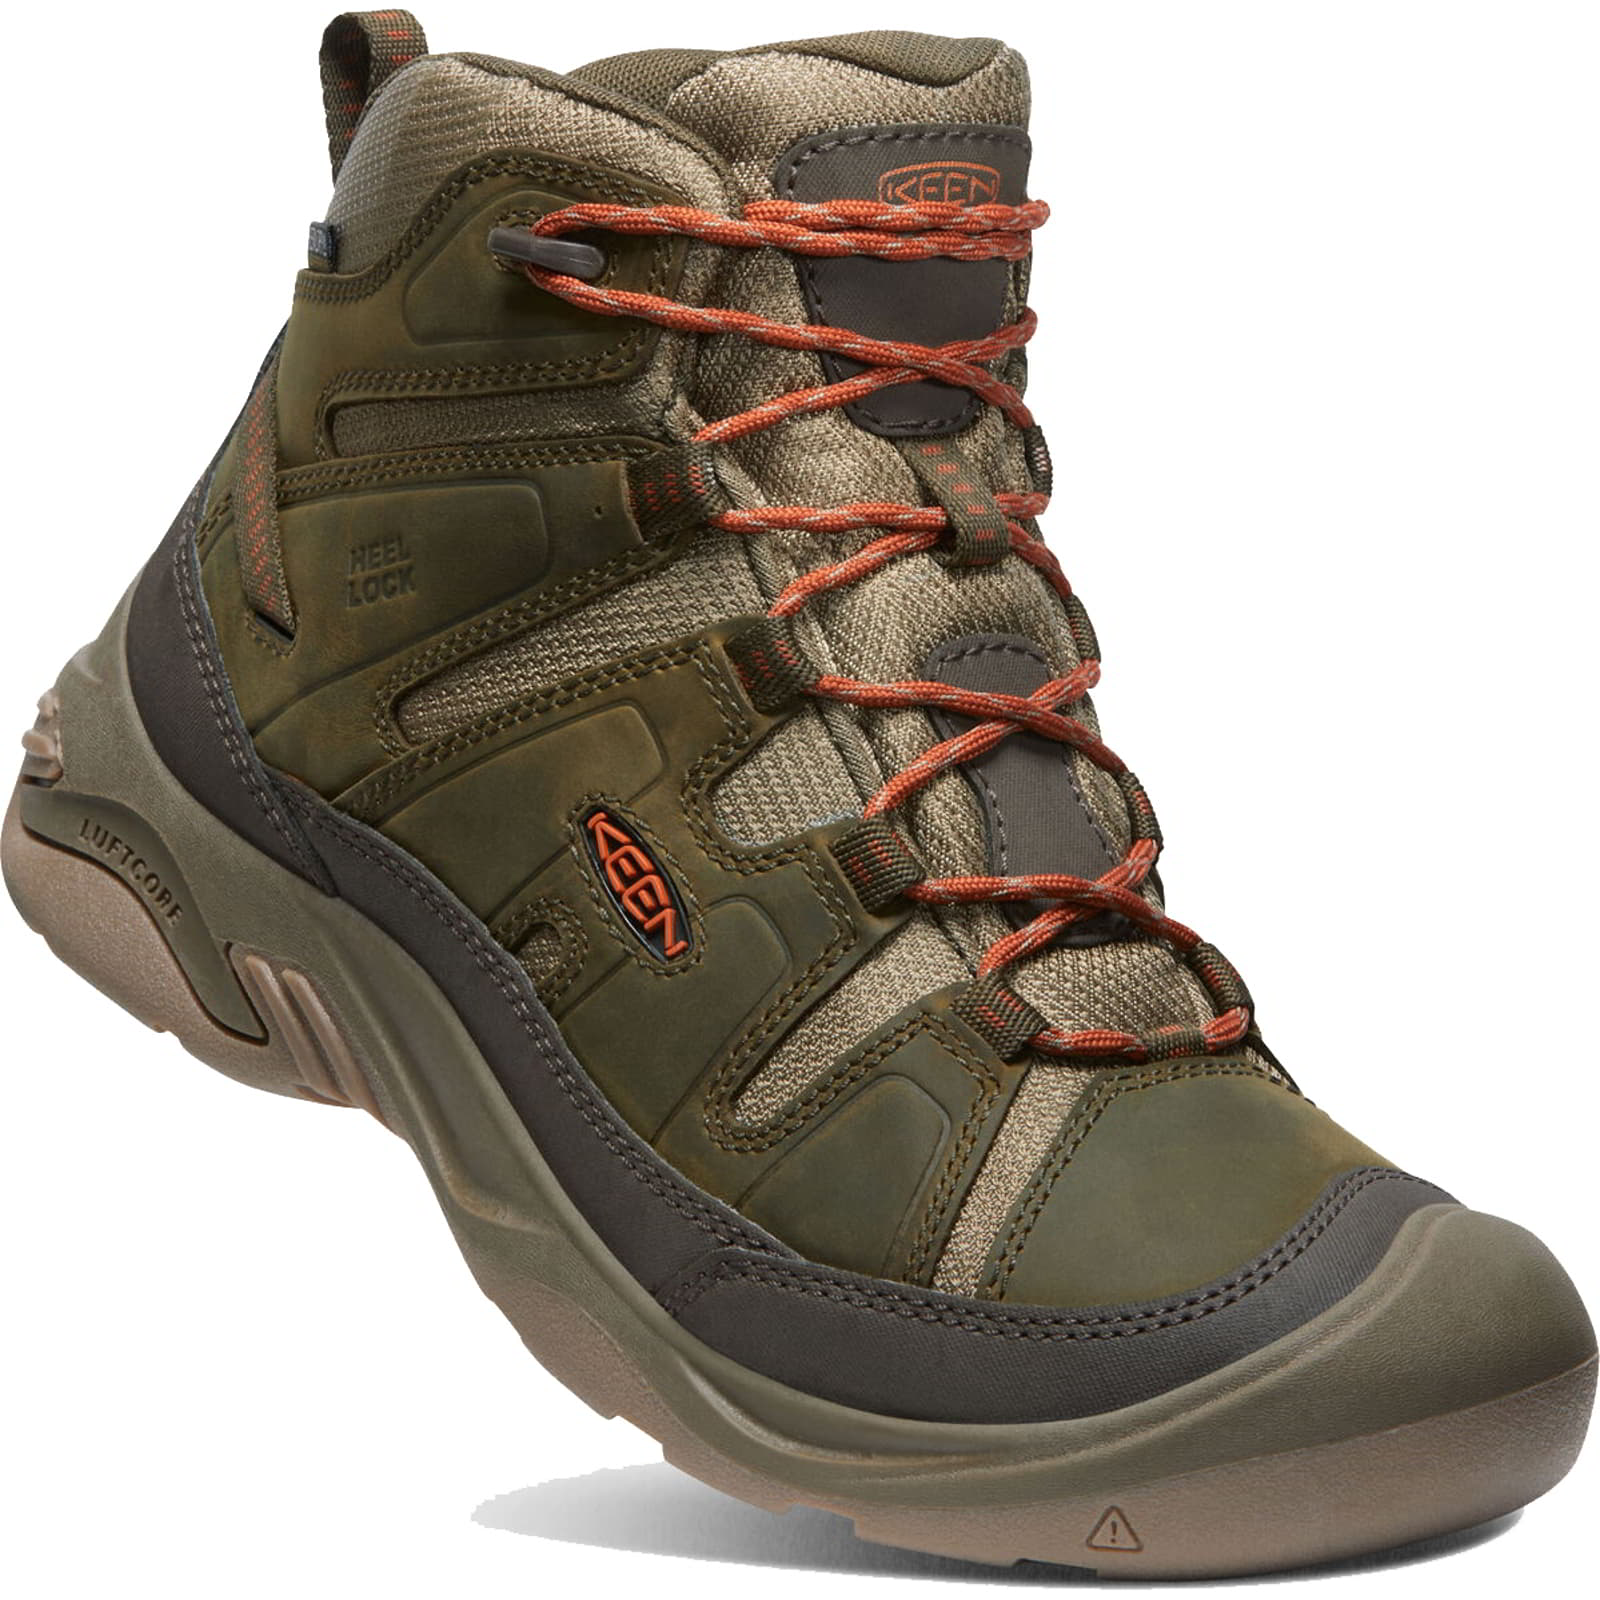 Keen Men's Circadia Mid Waterproof Walking Hiking Boots  - UK 10 / EU 44.5 / US 11